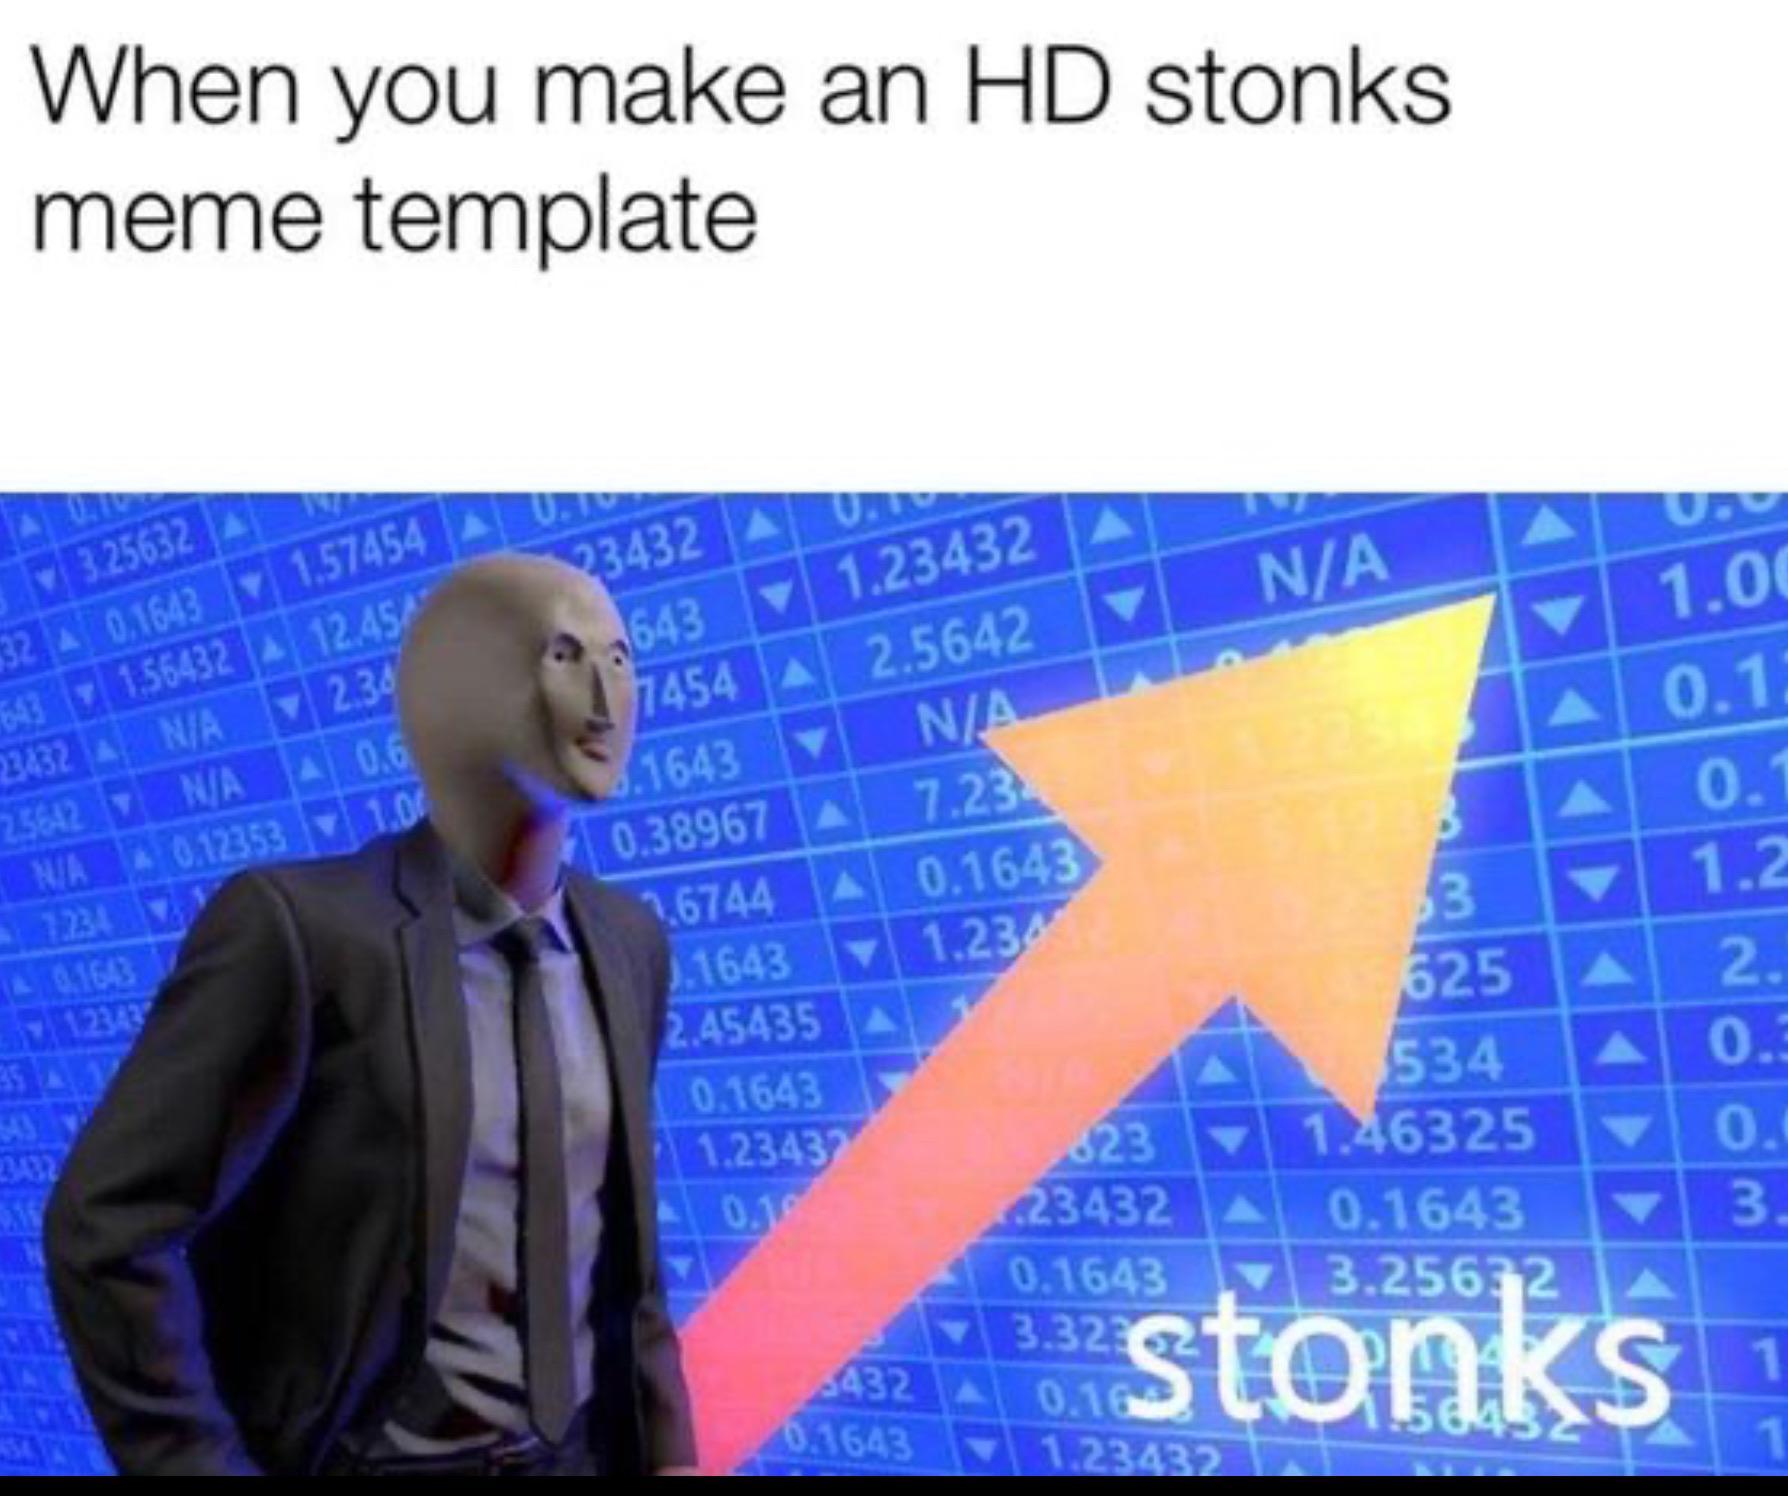 HD stonks - meme.